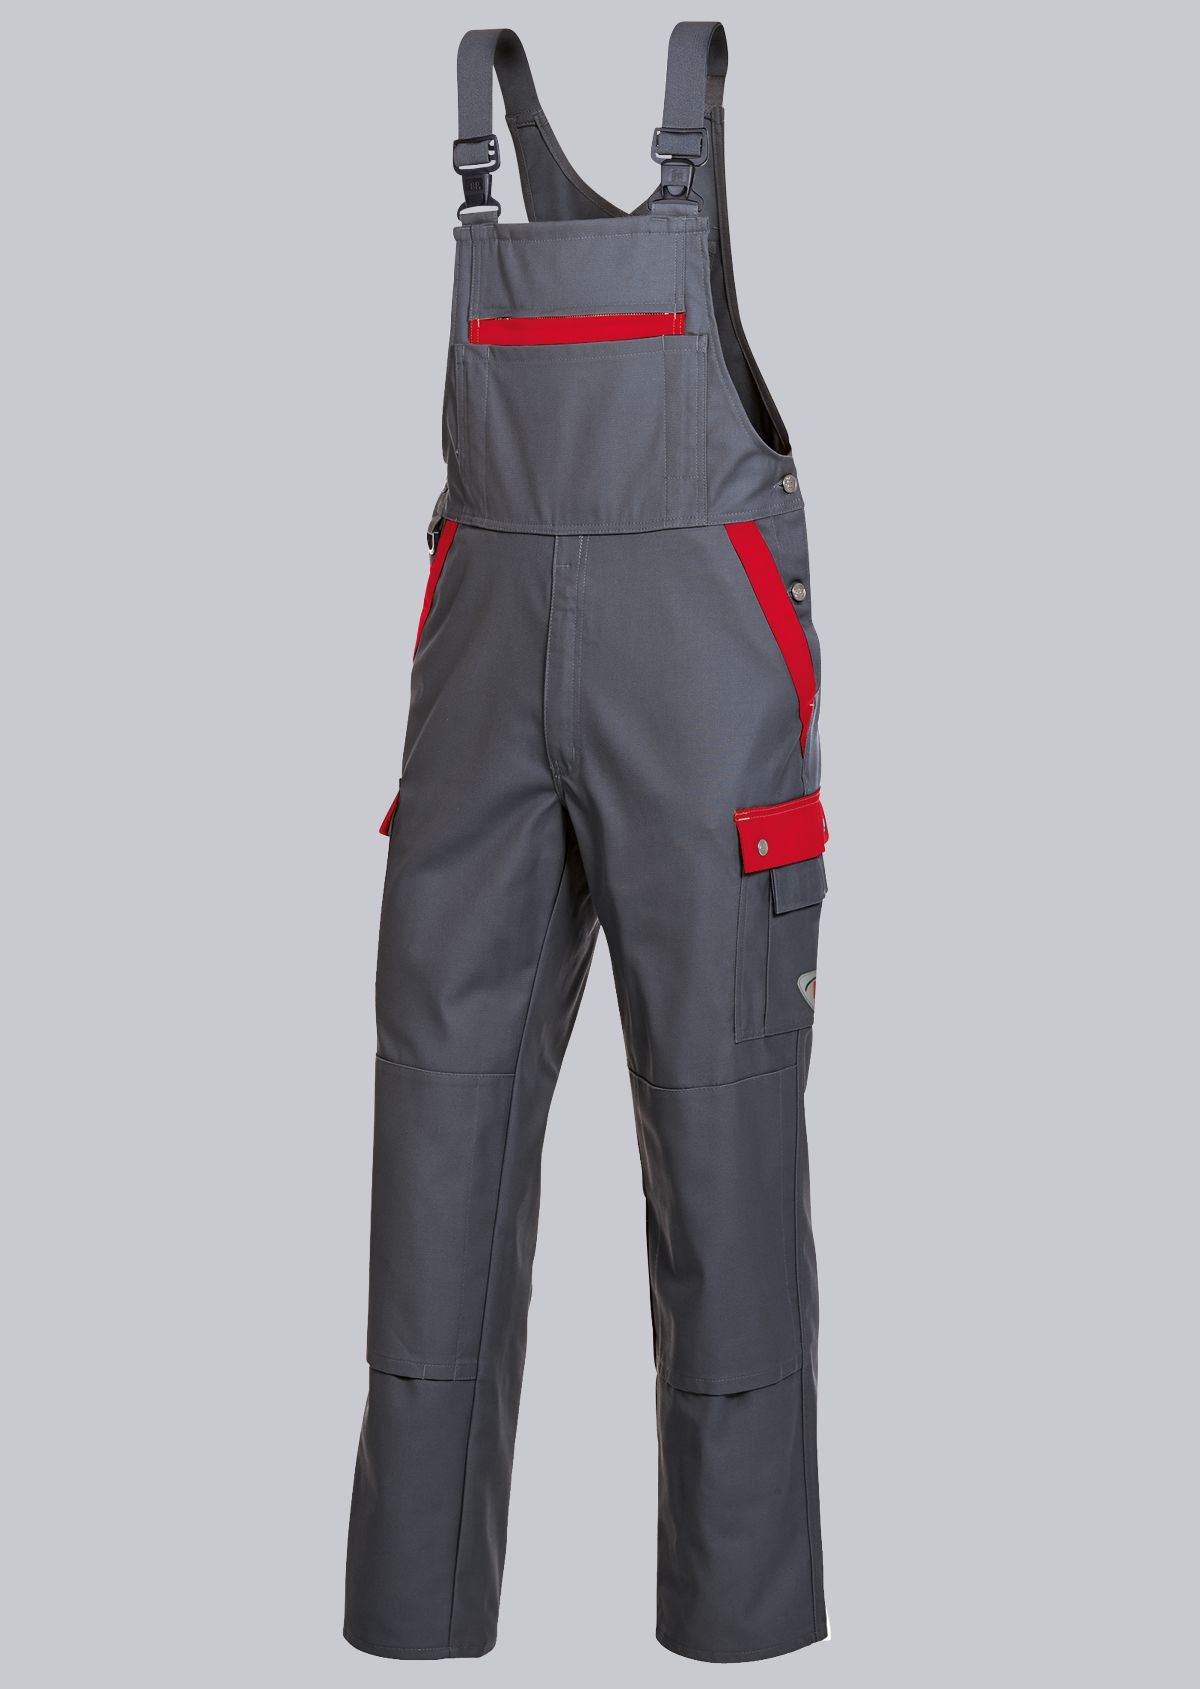 BP Workwear Dungarees 1844 Bib & Brace Work Trousers Pants Dark Grey/Red 